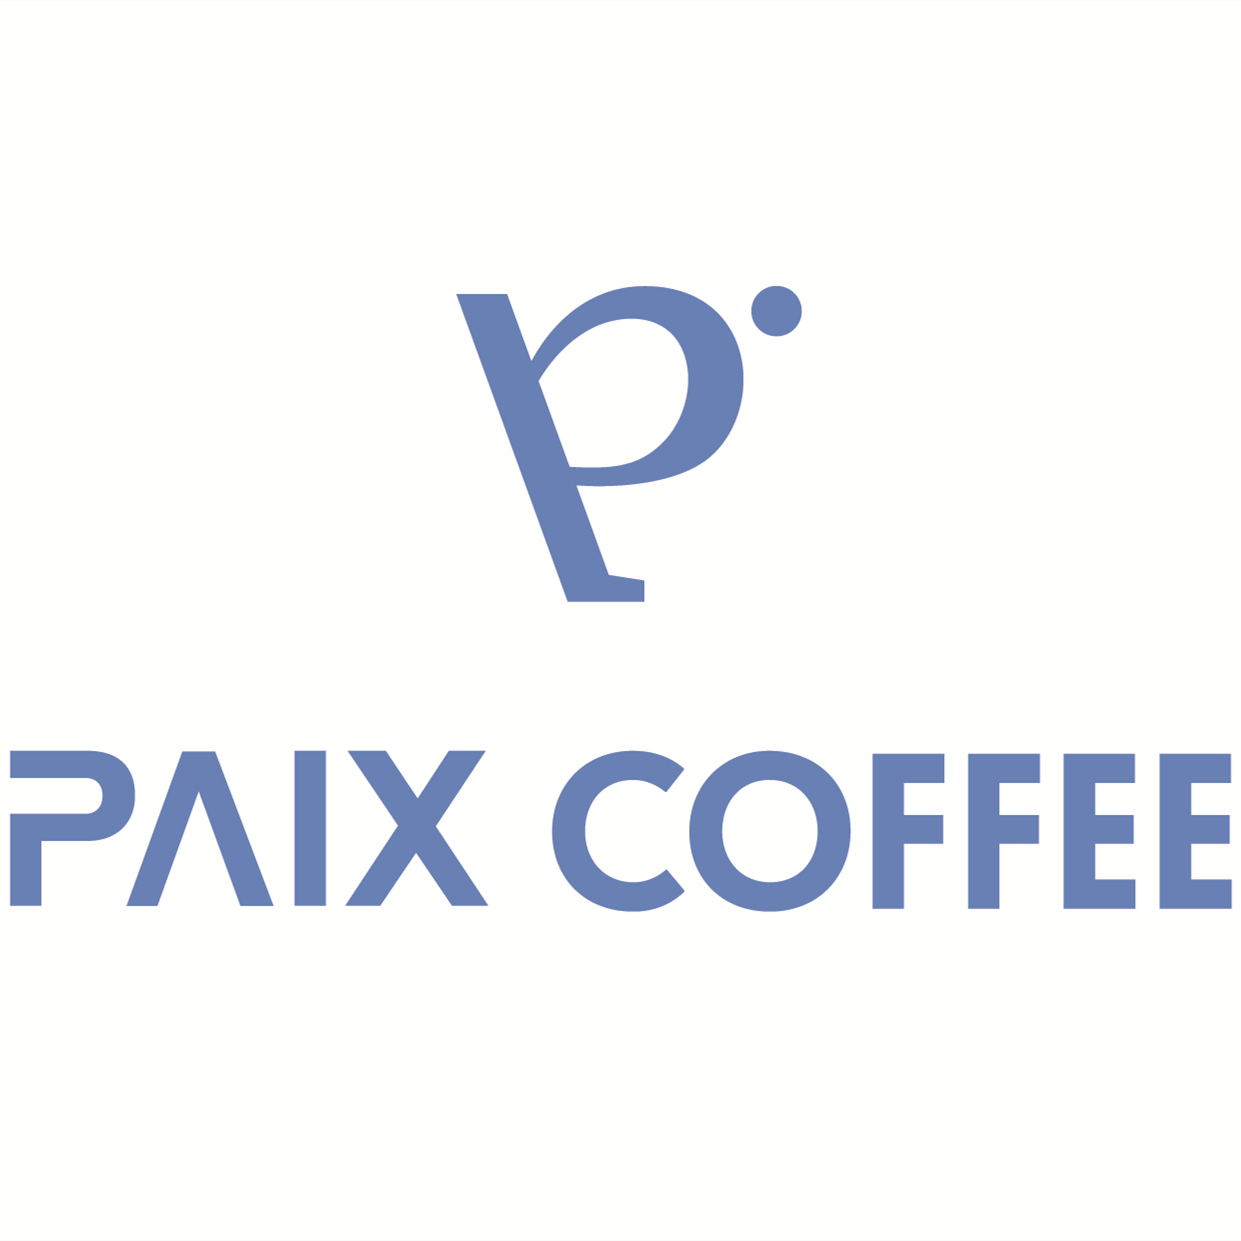 PAIX COFFEE